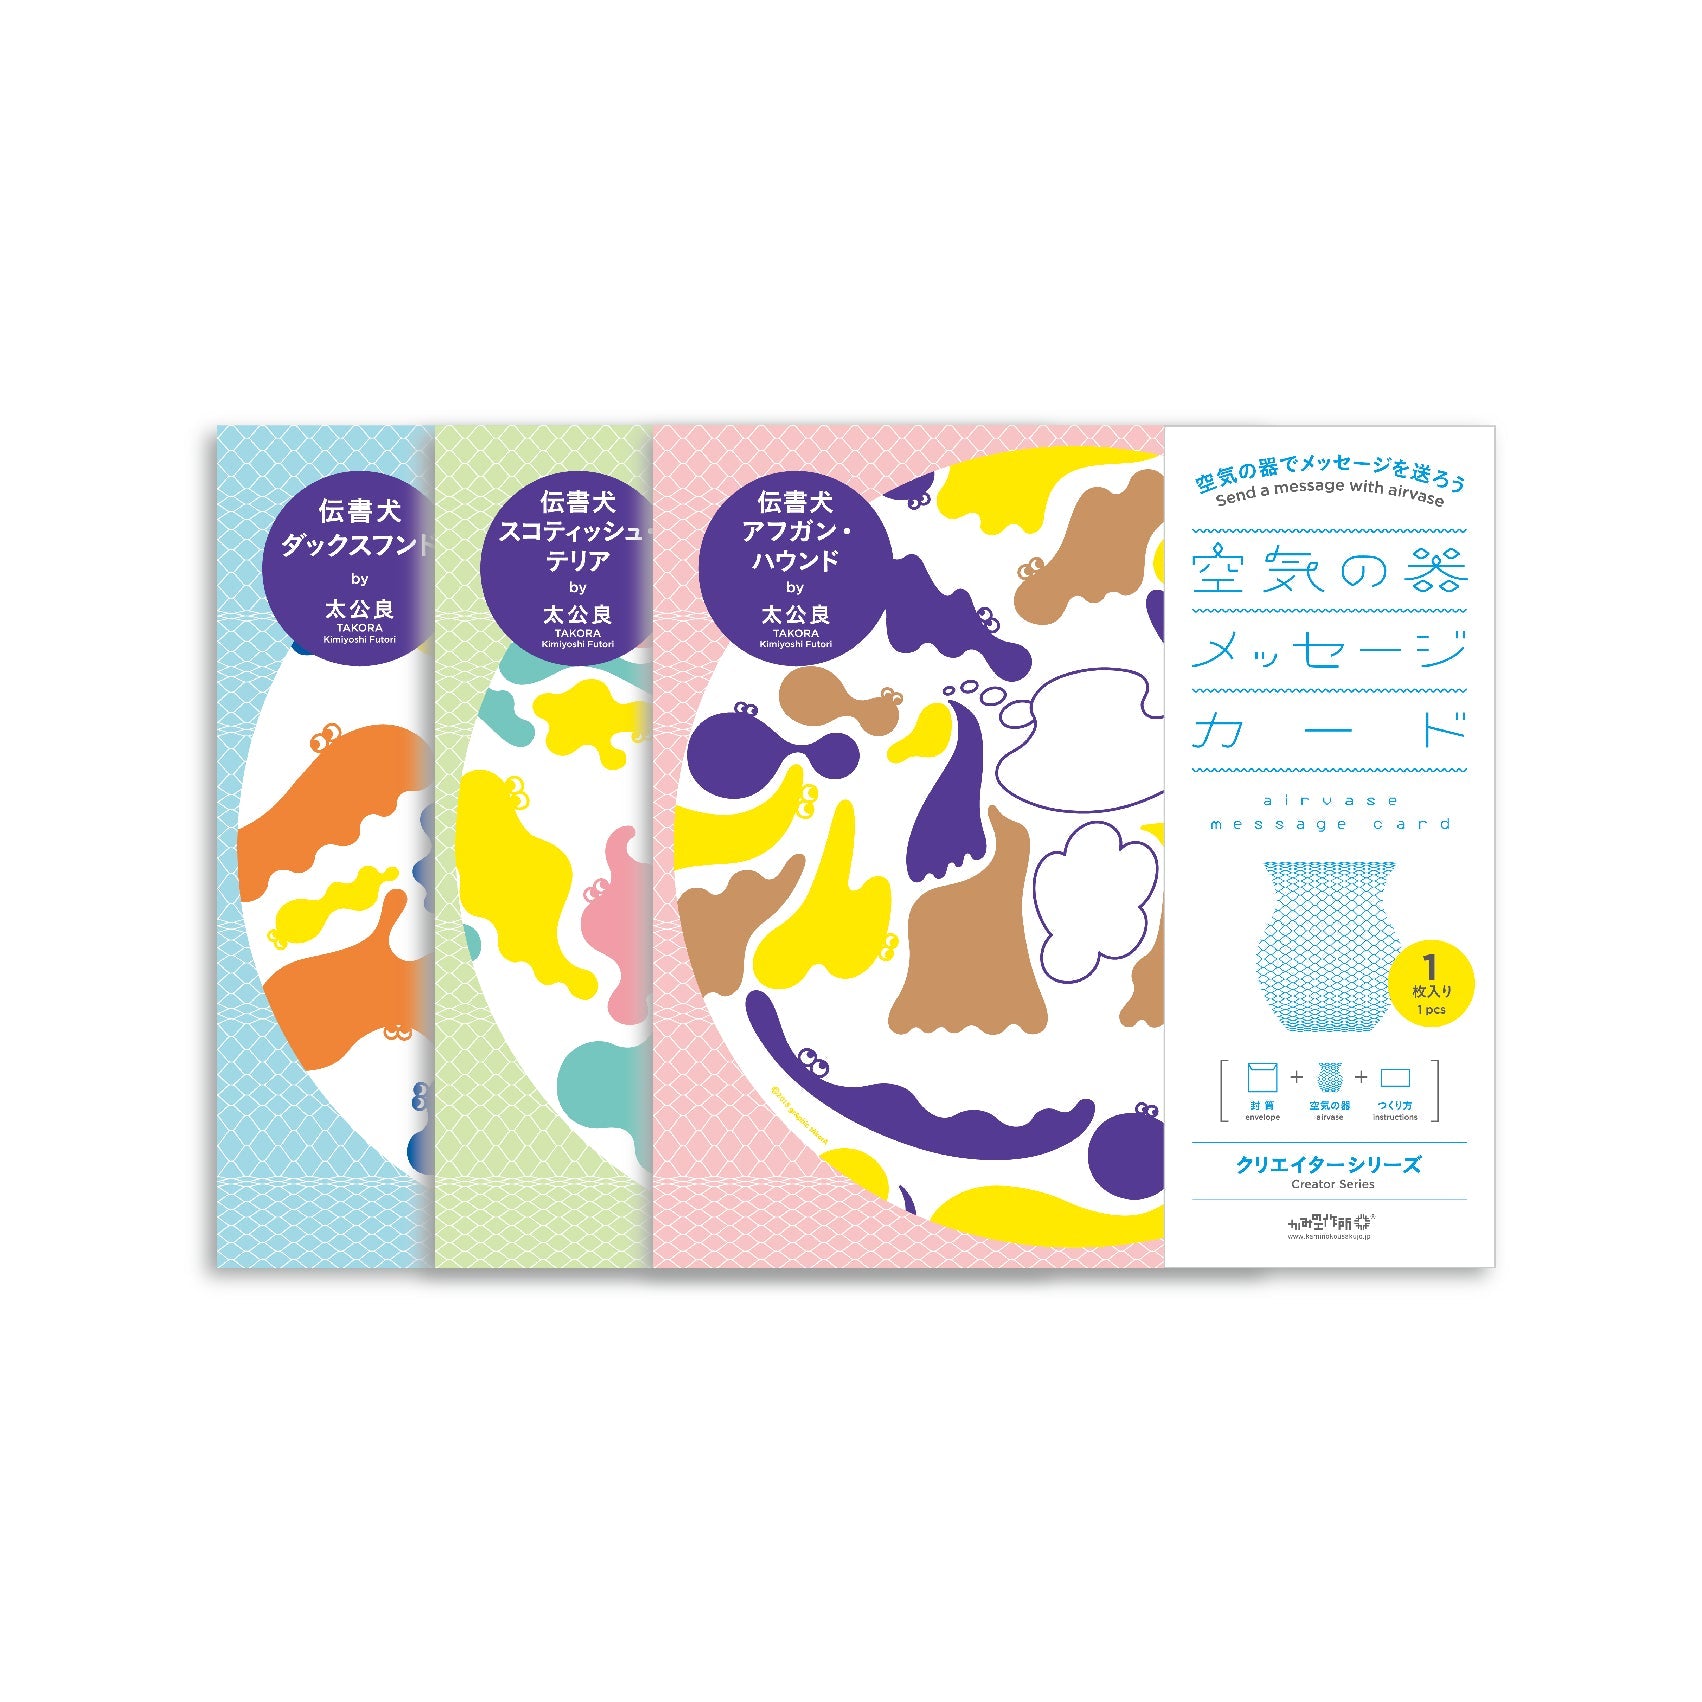 airvase Message Card Creator Series by TAKORA Kimiyoshi Futori